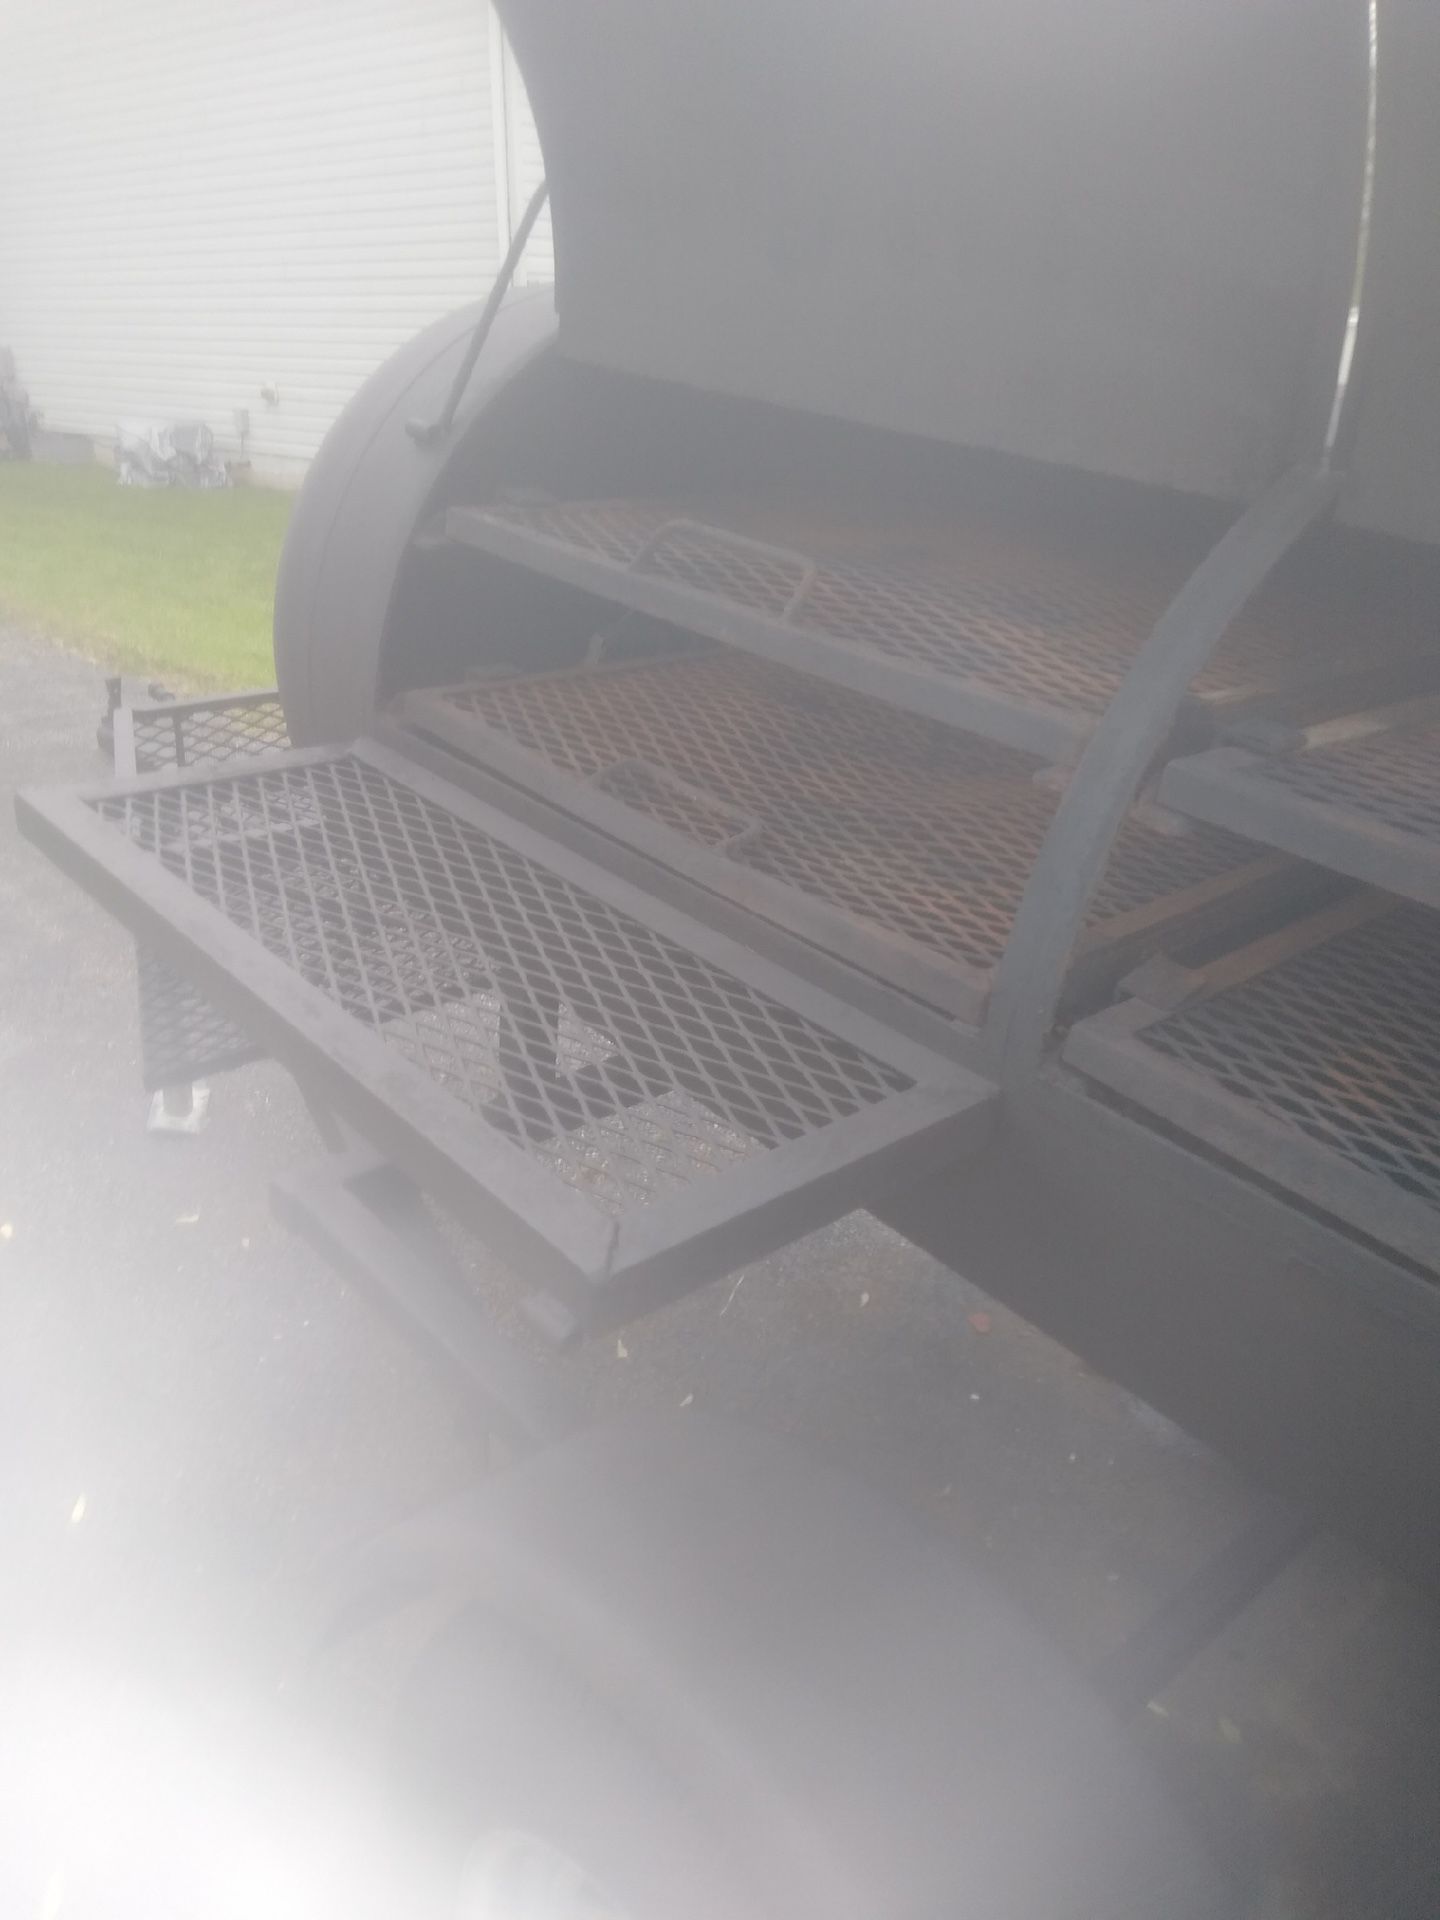 Mobile grill trailer